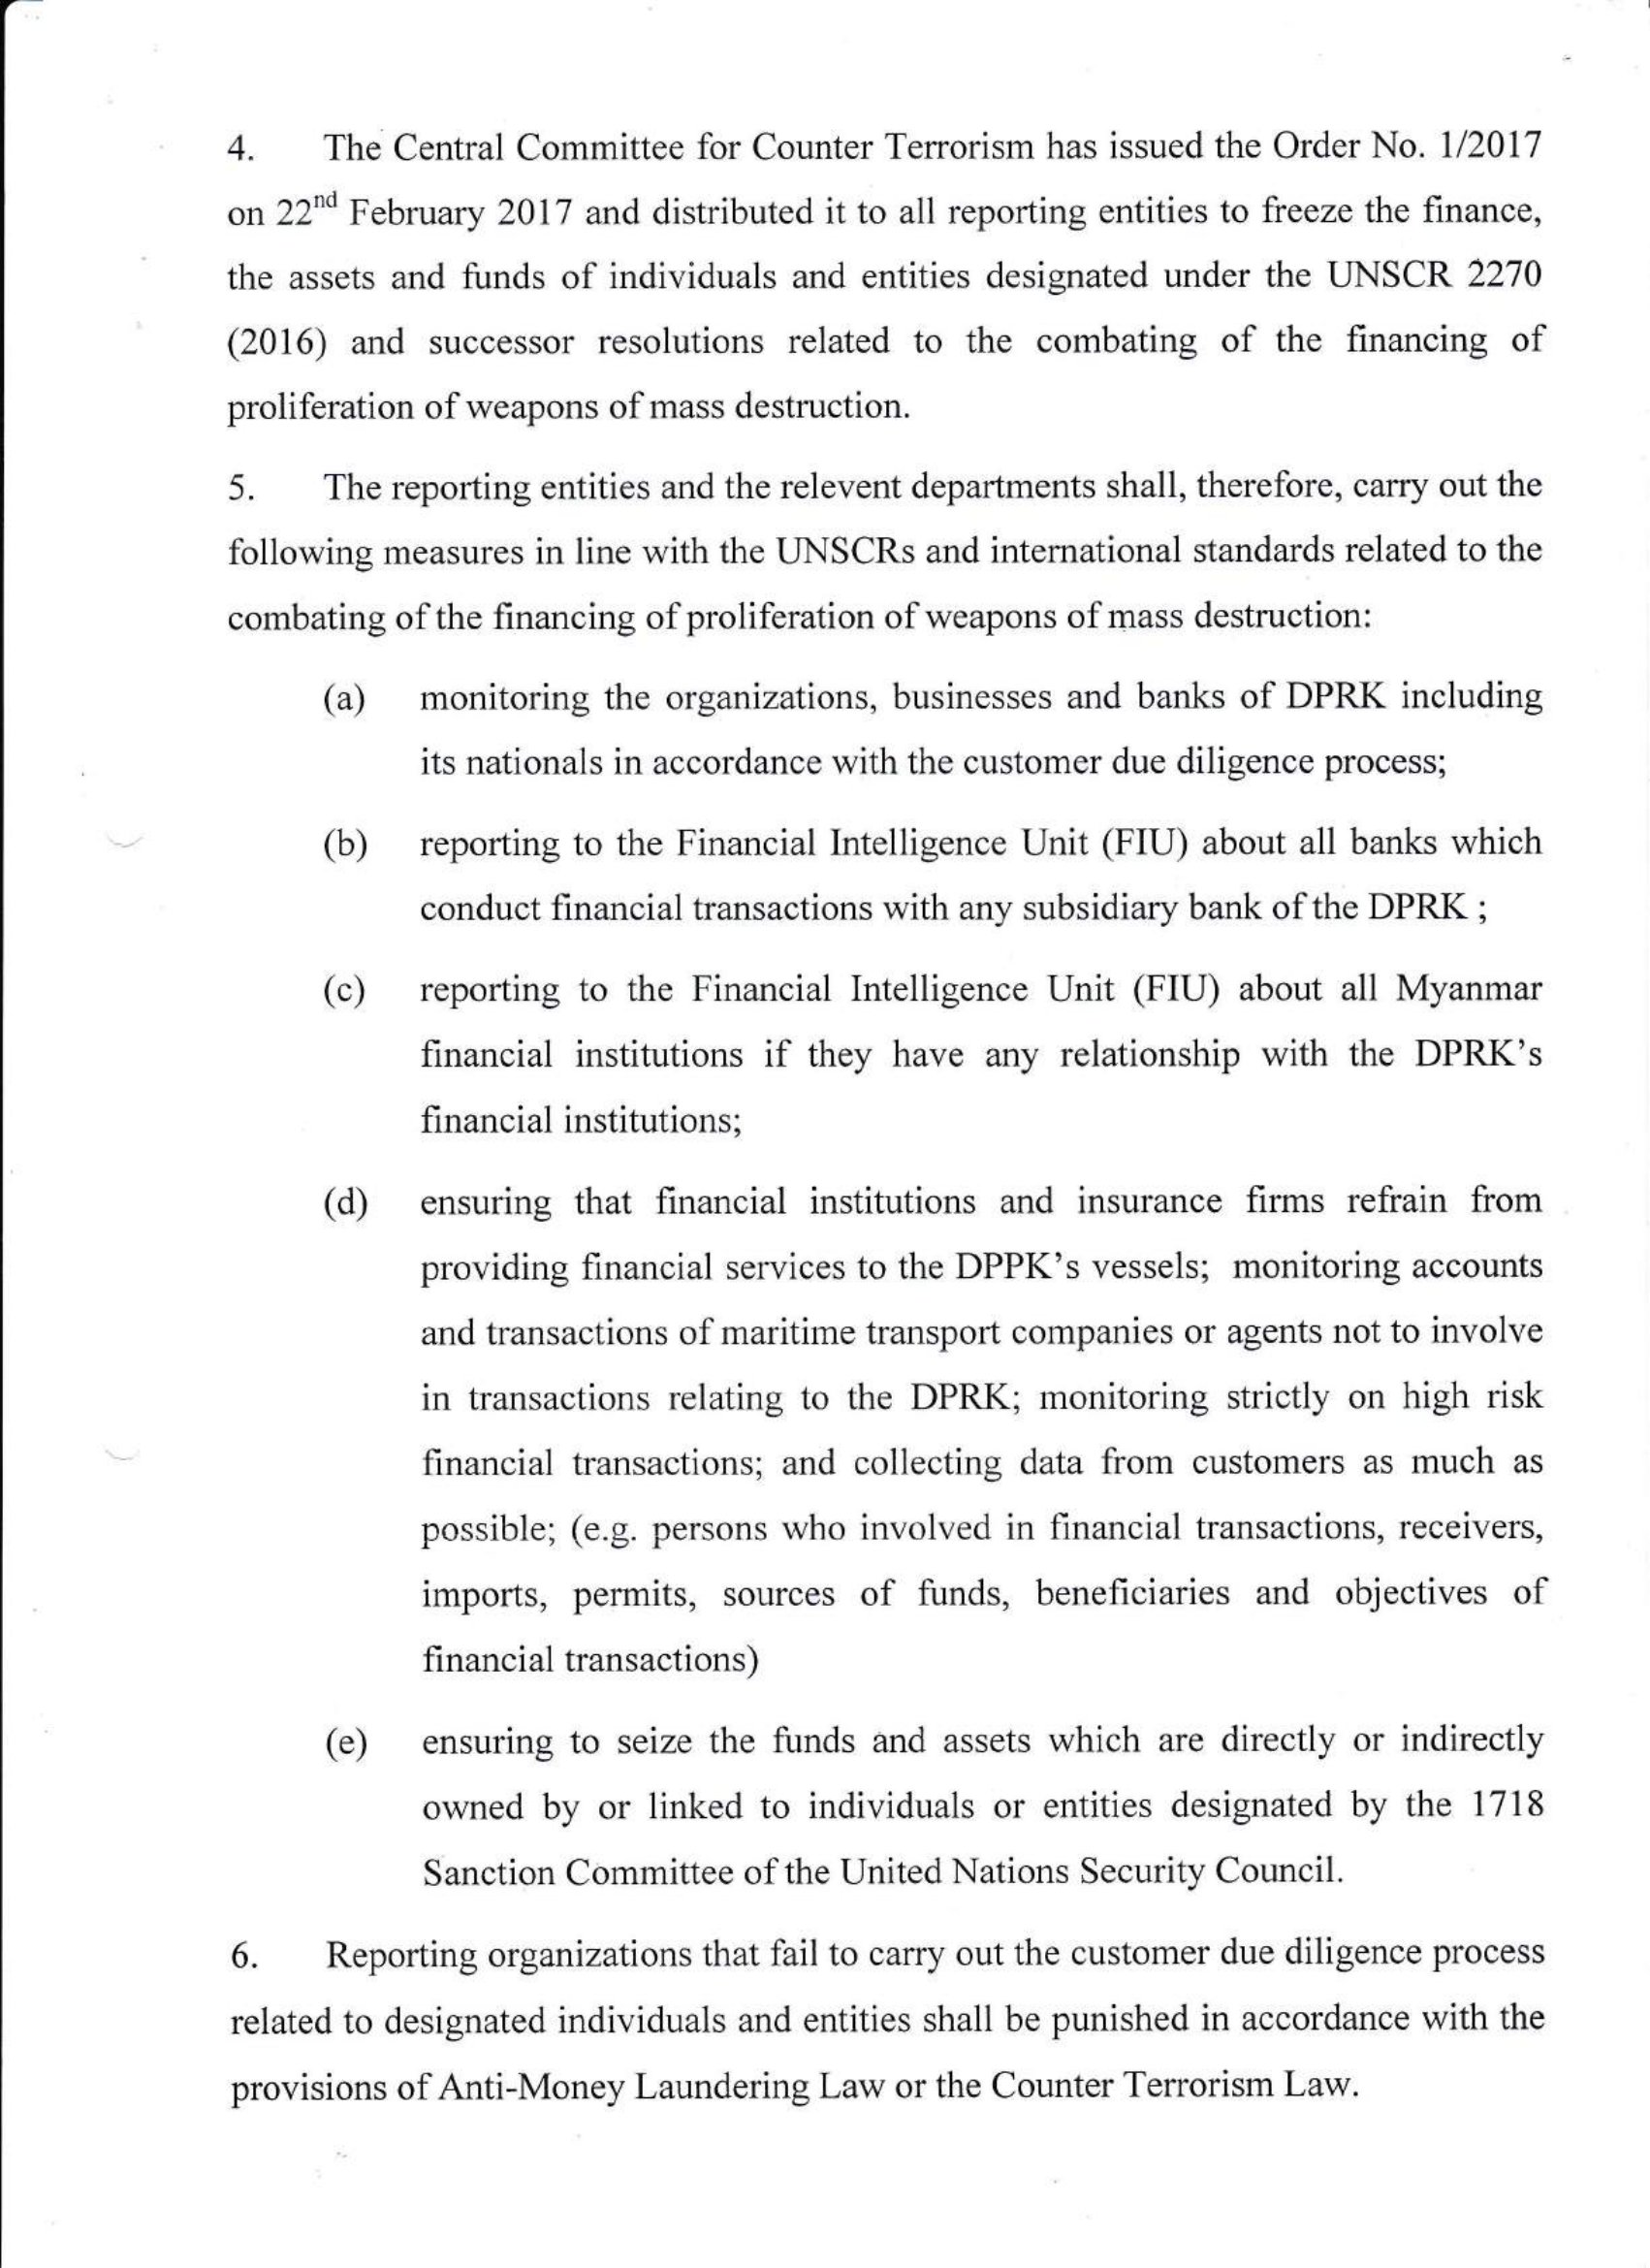 CCCT proliferation order (1 2018) (UNSCR 2270)